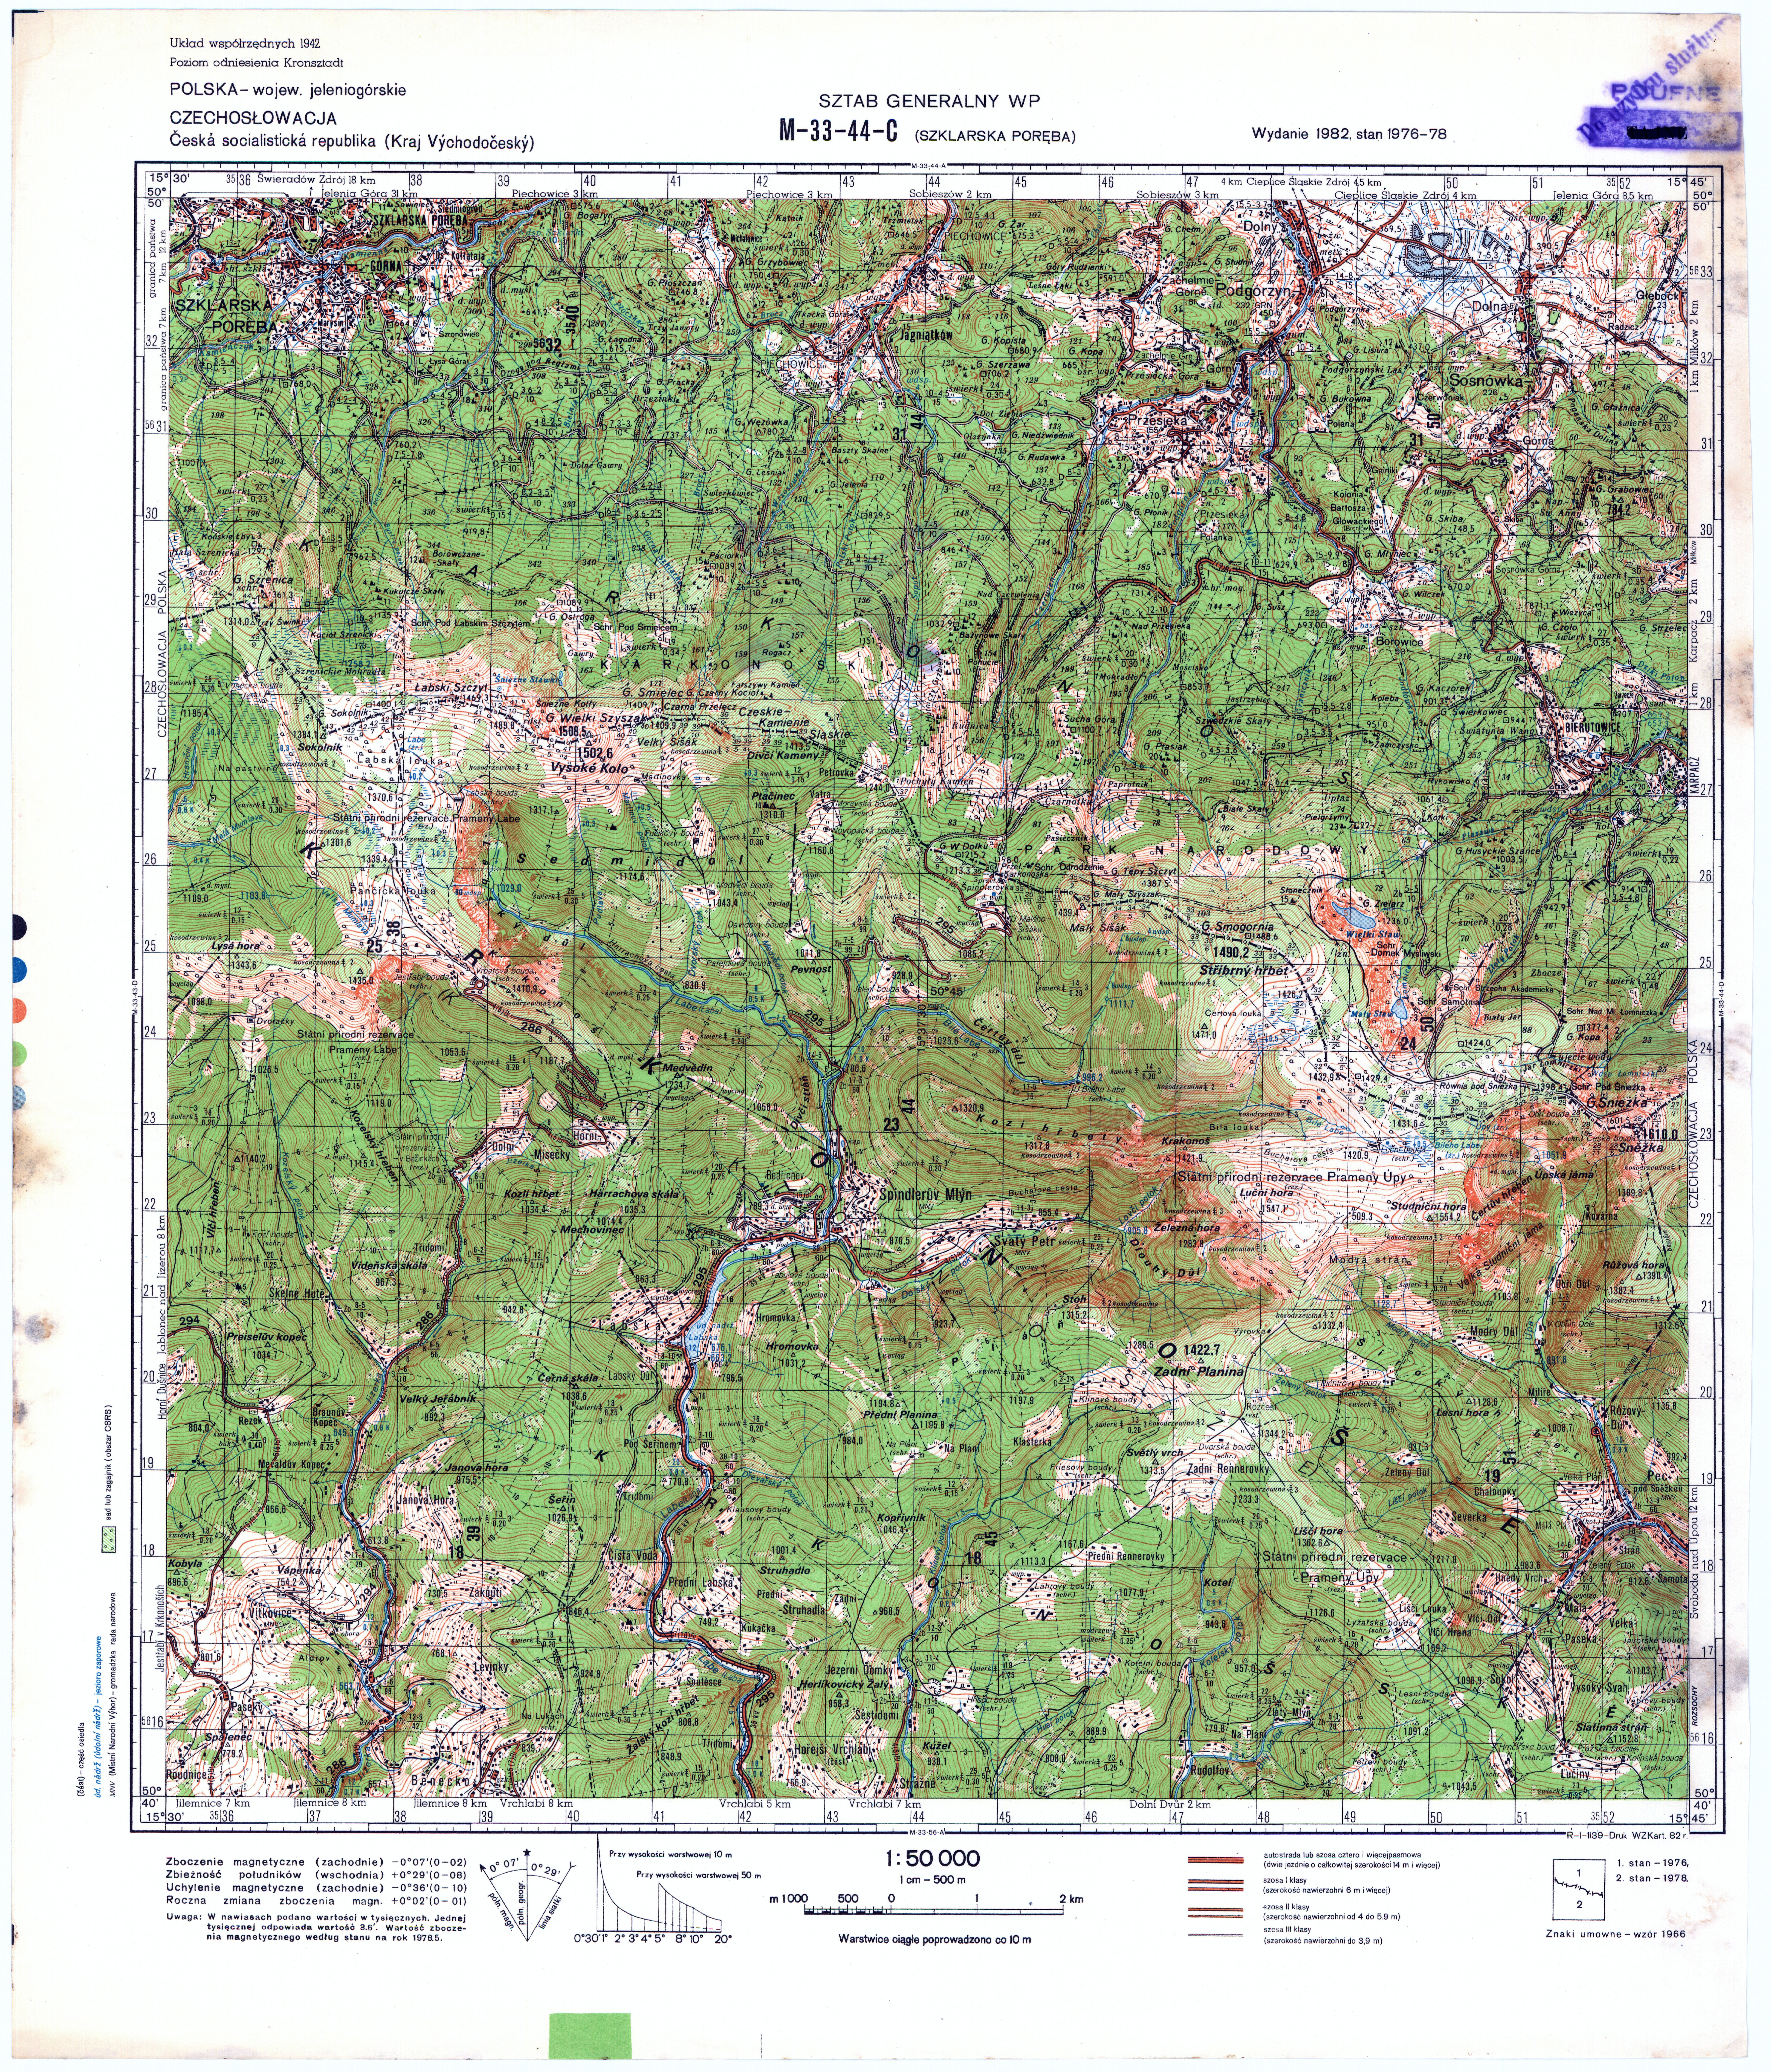 Mapy topograficzne LWP 1_50 000 - M-33-44-C_SZKLARSKA_POREBA_1982.jpg